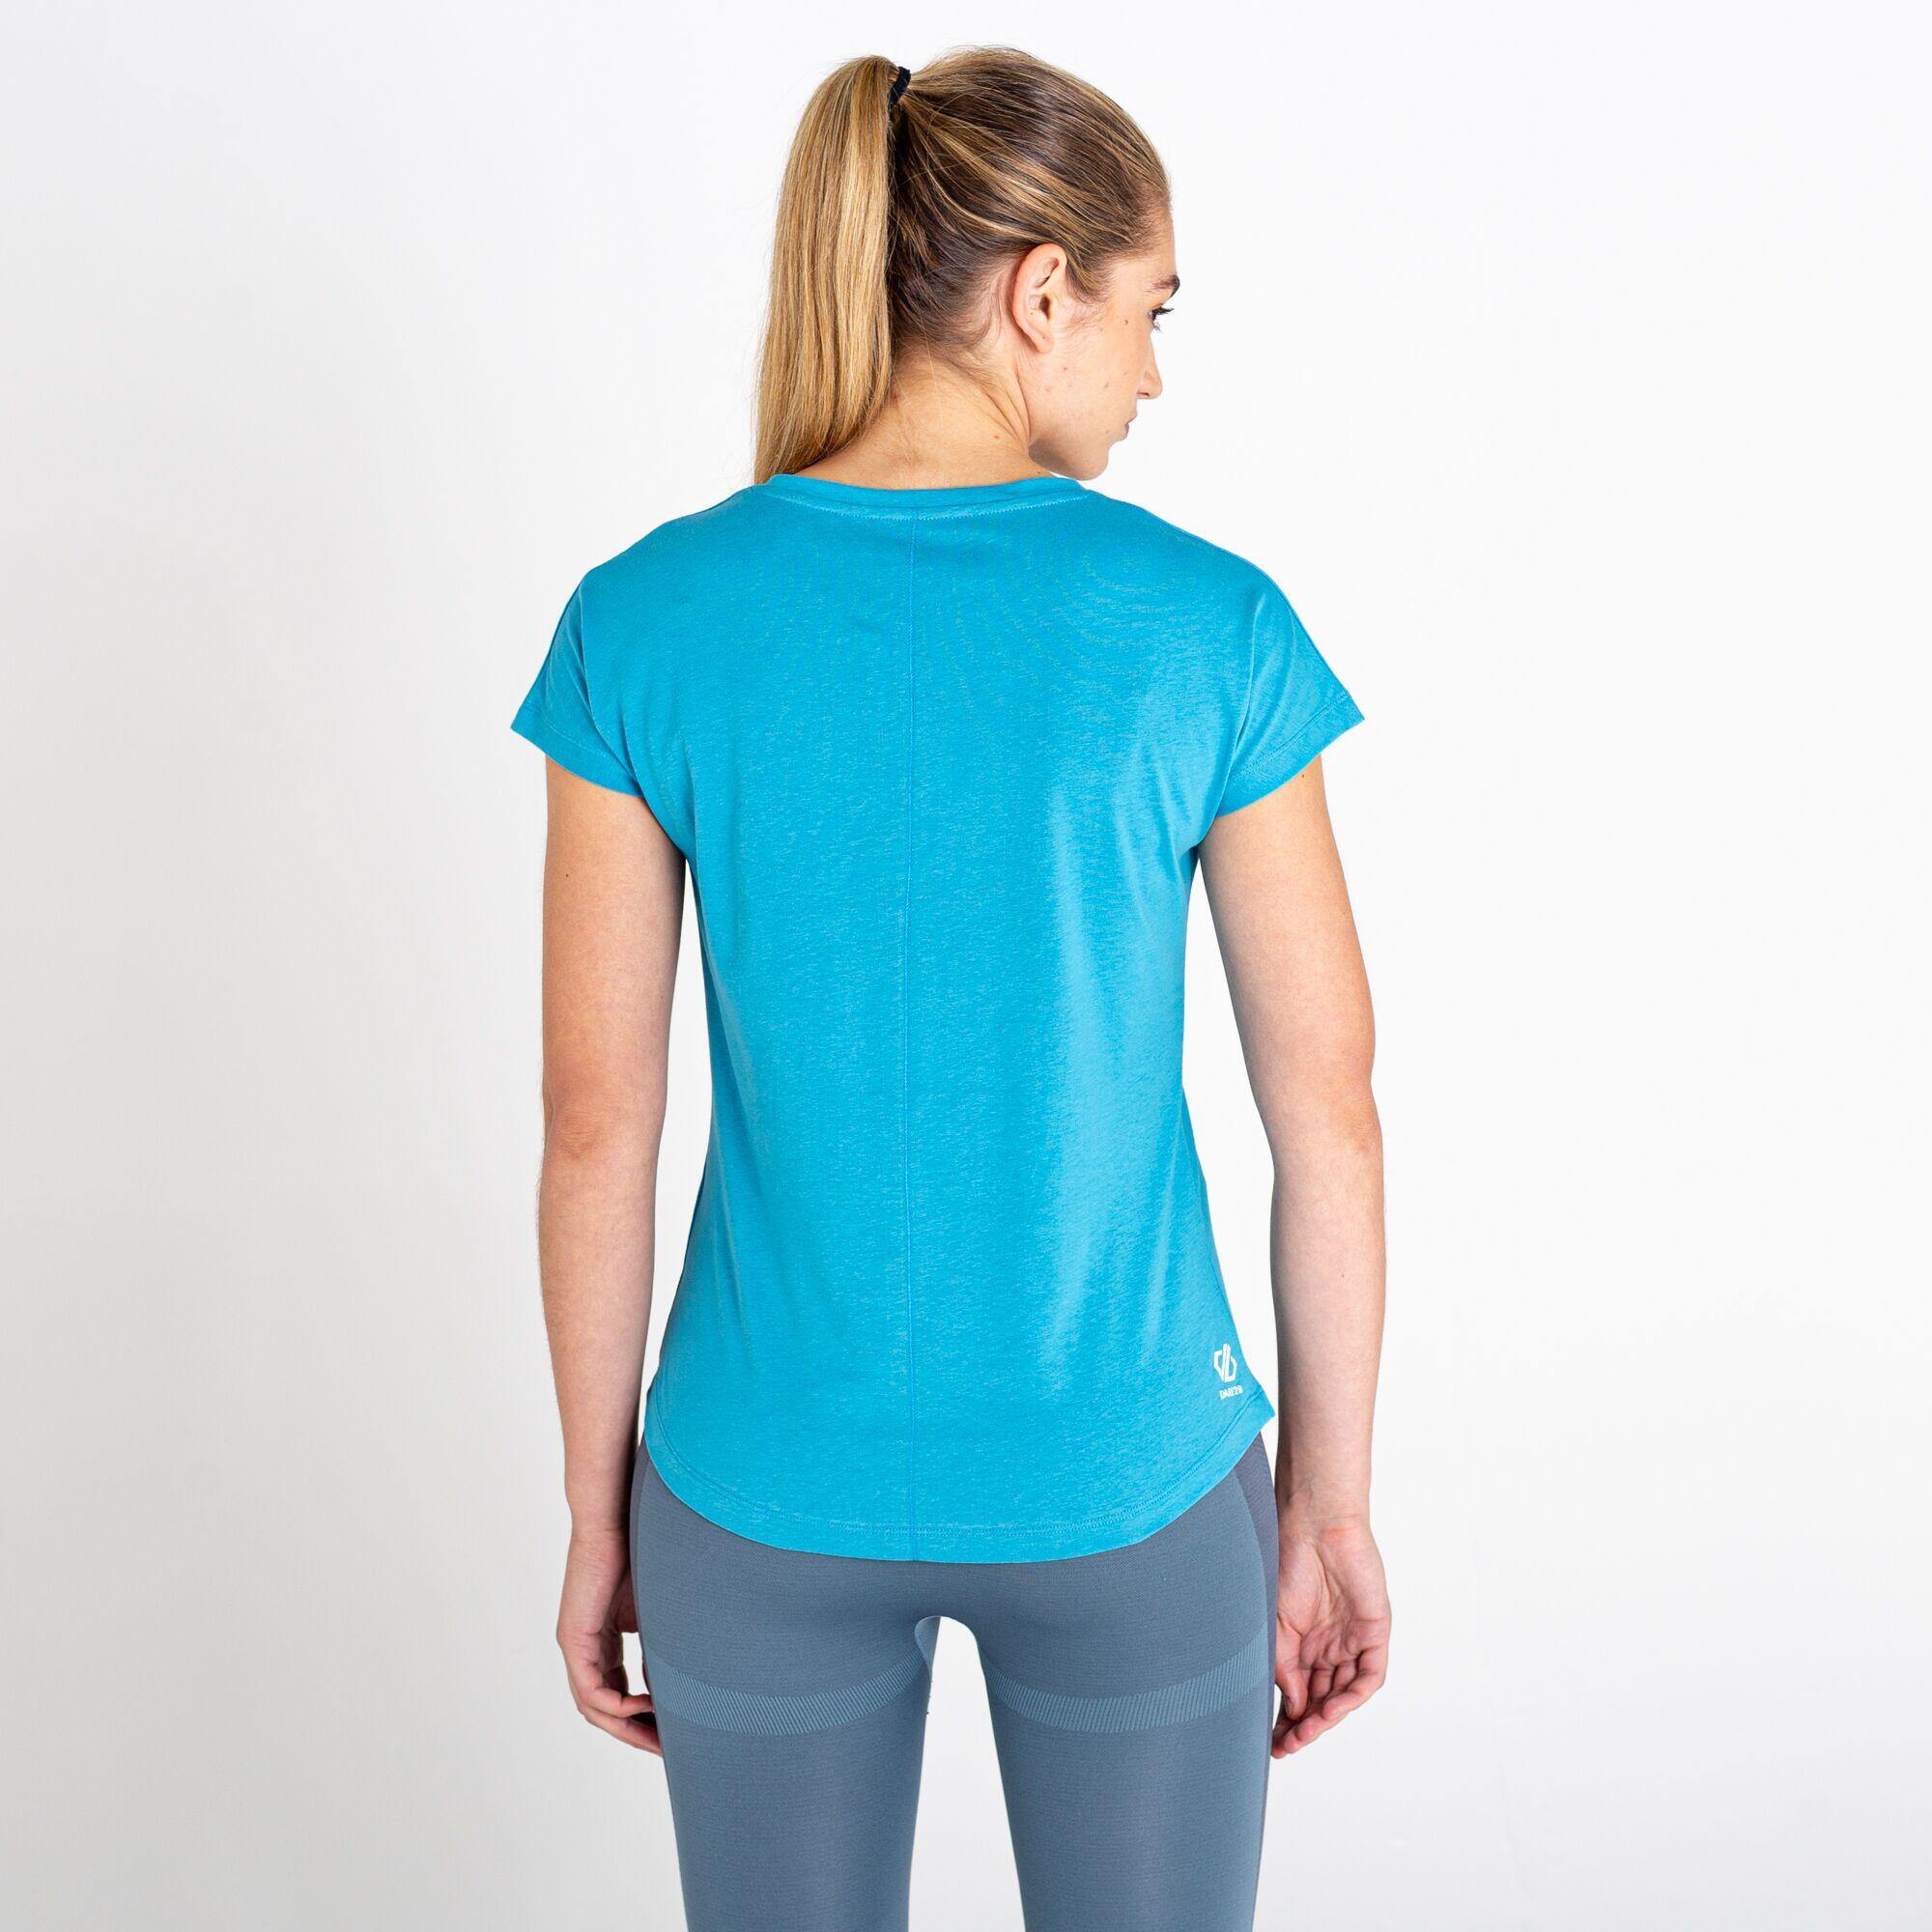 Moments II Women's Fitness Short Sleeve T-Shirt - Capri Blue 3/5